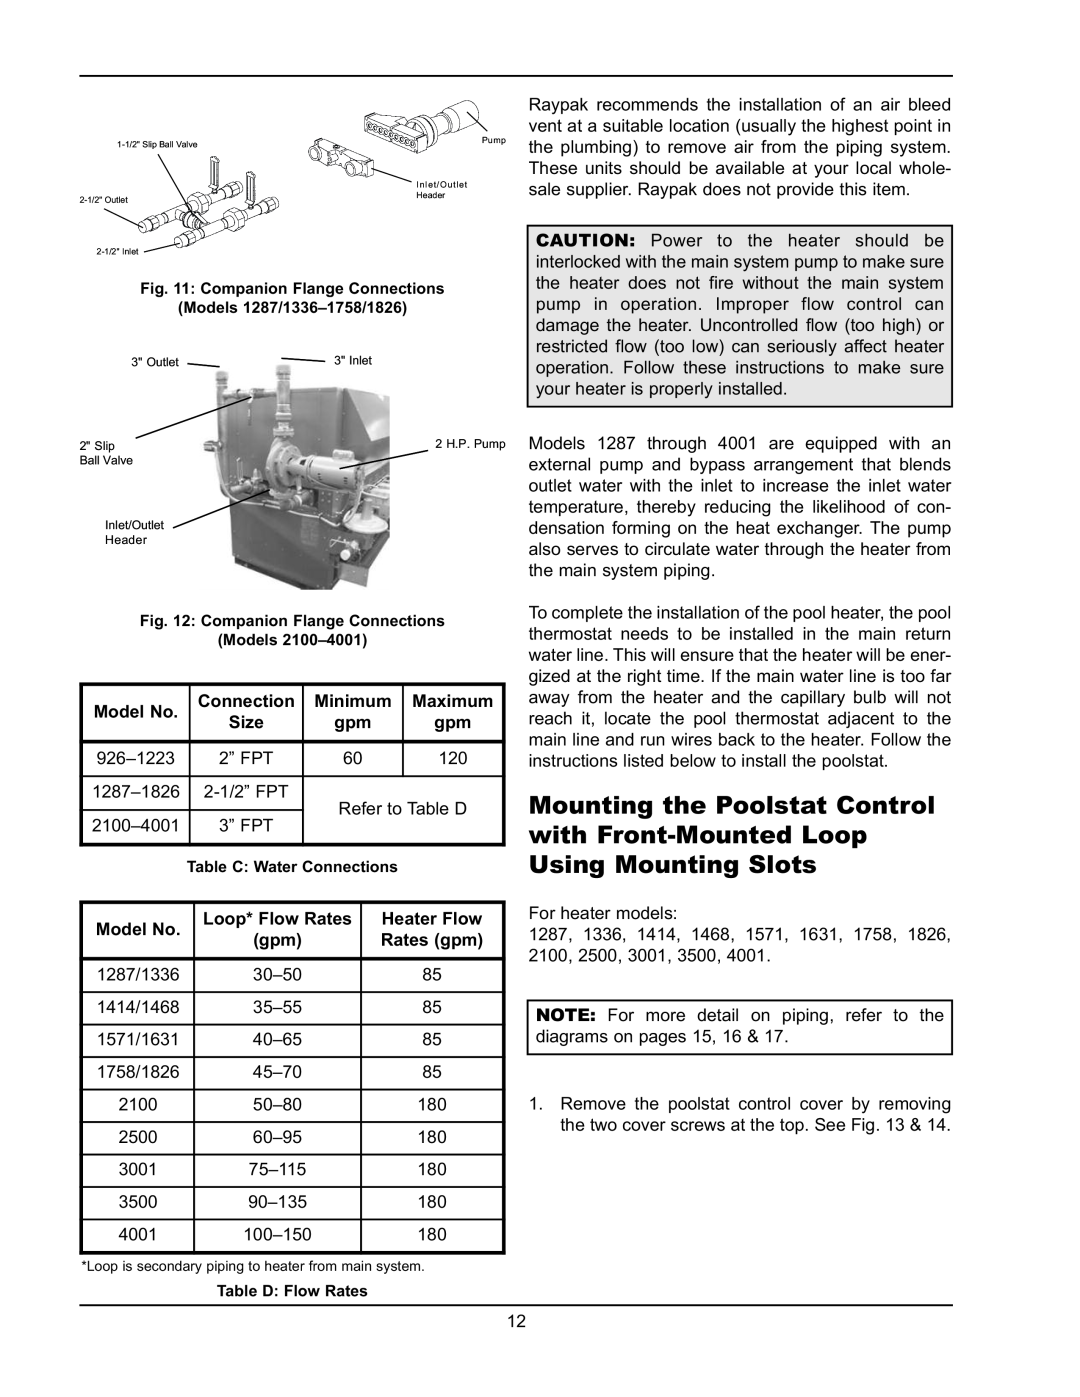 Raypak P-1826, P-4001, P-926, P-2100 manual Connection, Minimum, Model No. Loop* Flow Rates Heater Flow, gpm Rates gpm 